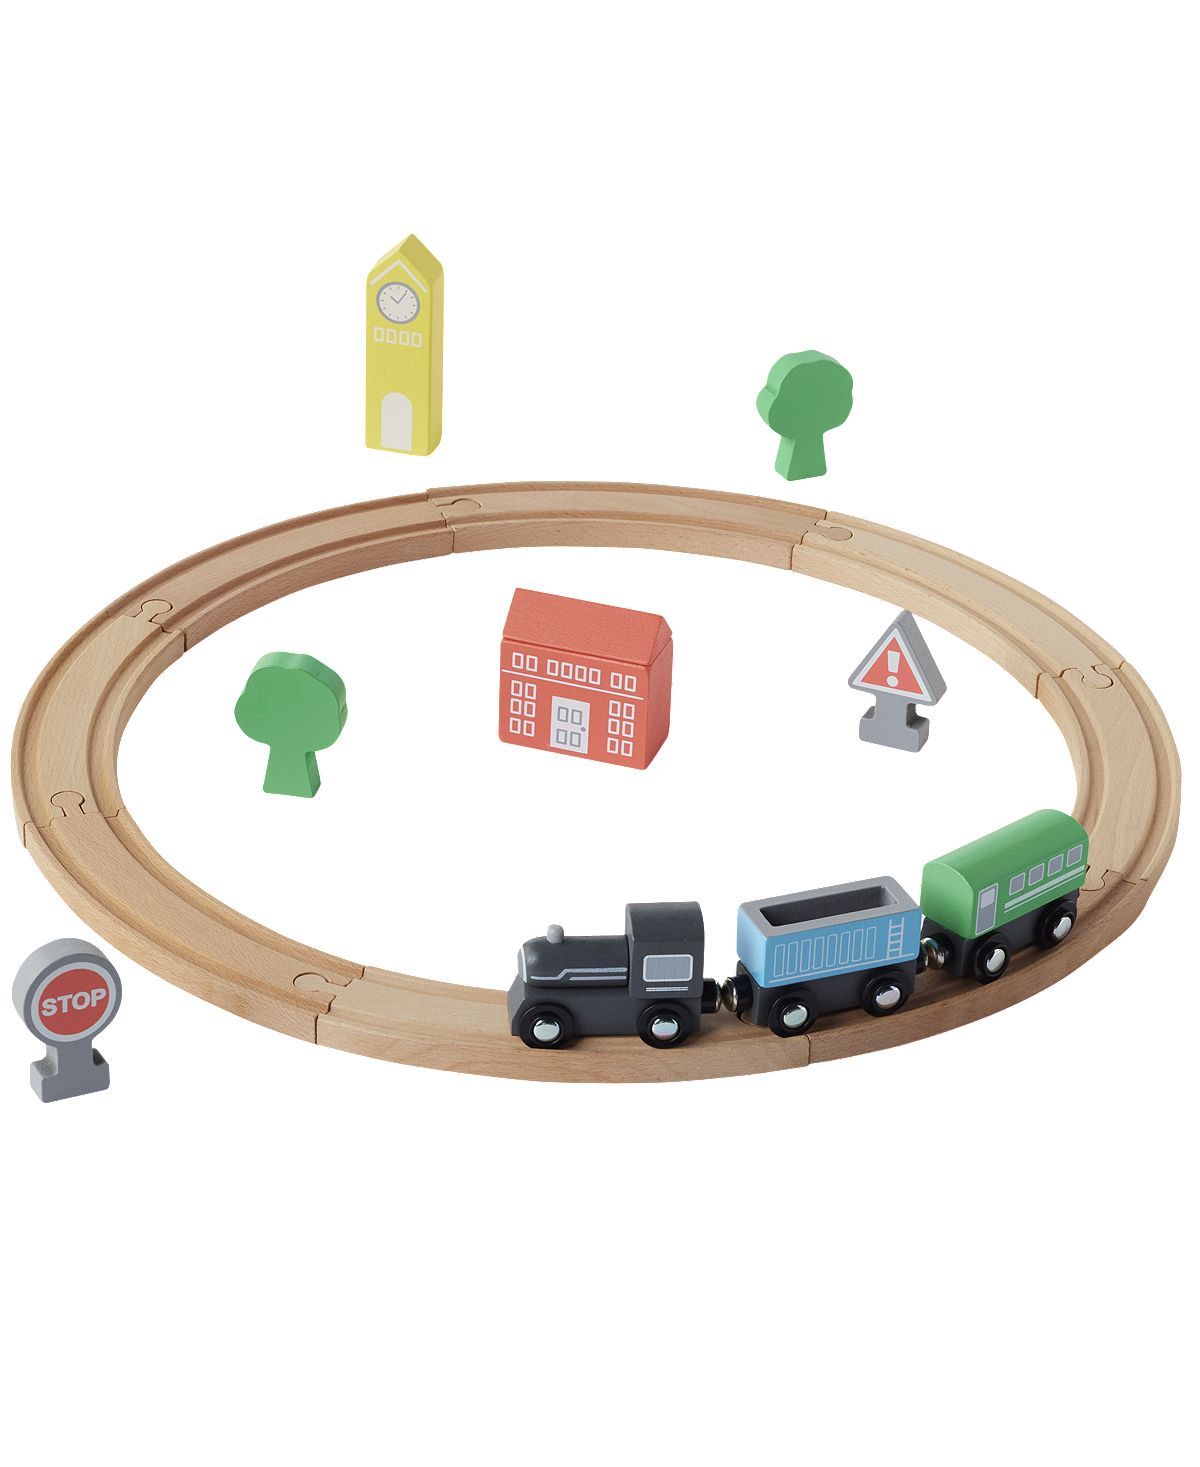 Toys R Us Imaginarium 18-Piece Wooden Train Set for Creative Play